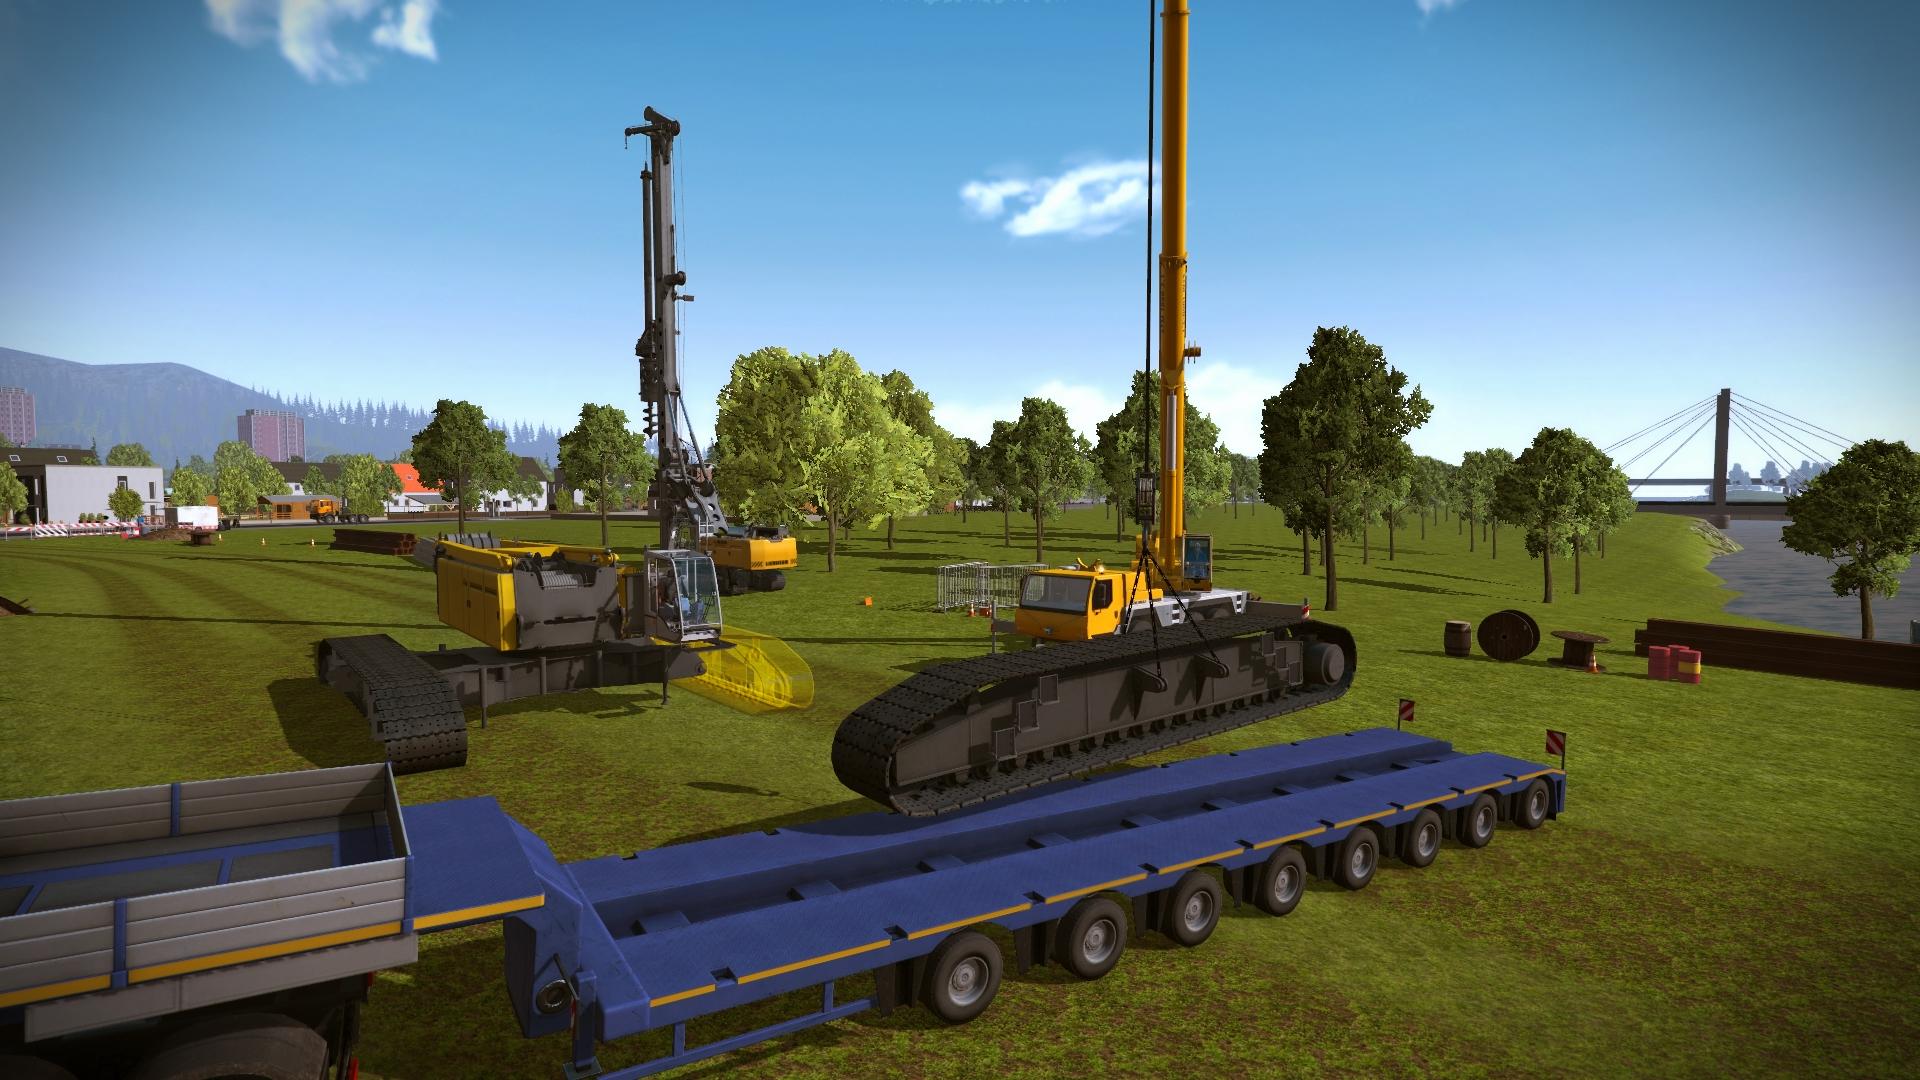 Screenshot №13 from game Construction Simulator 2015